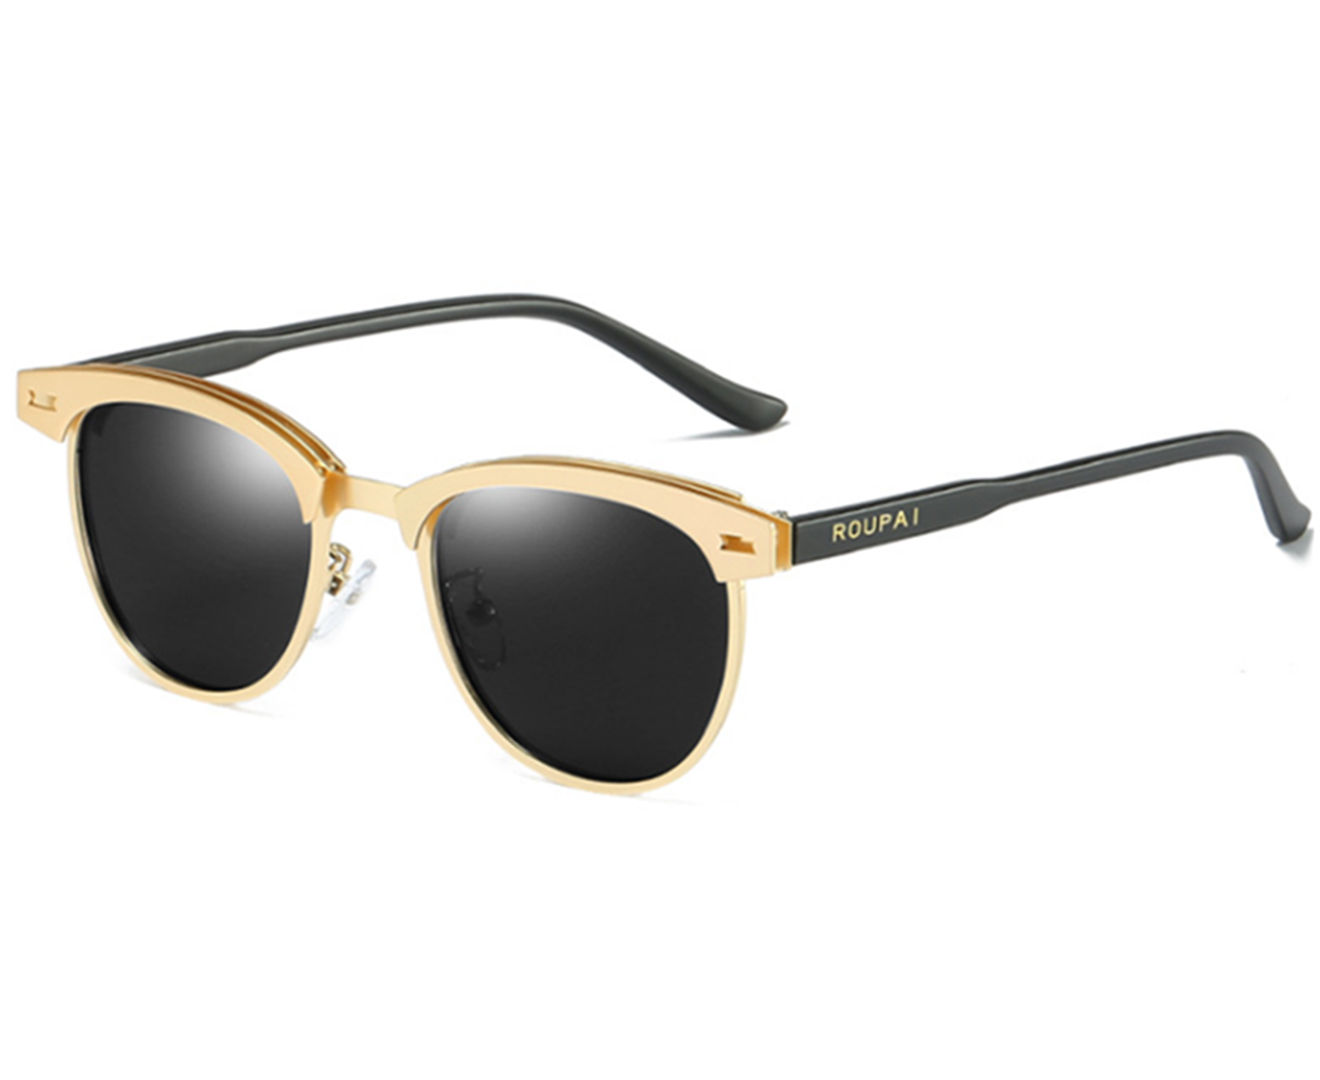 Men's Sports Style Semi Rimless High Definiton Polarized Sunglasses